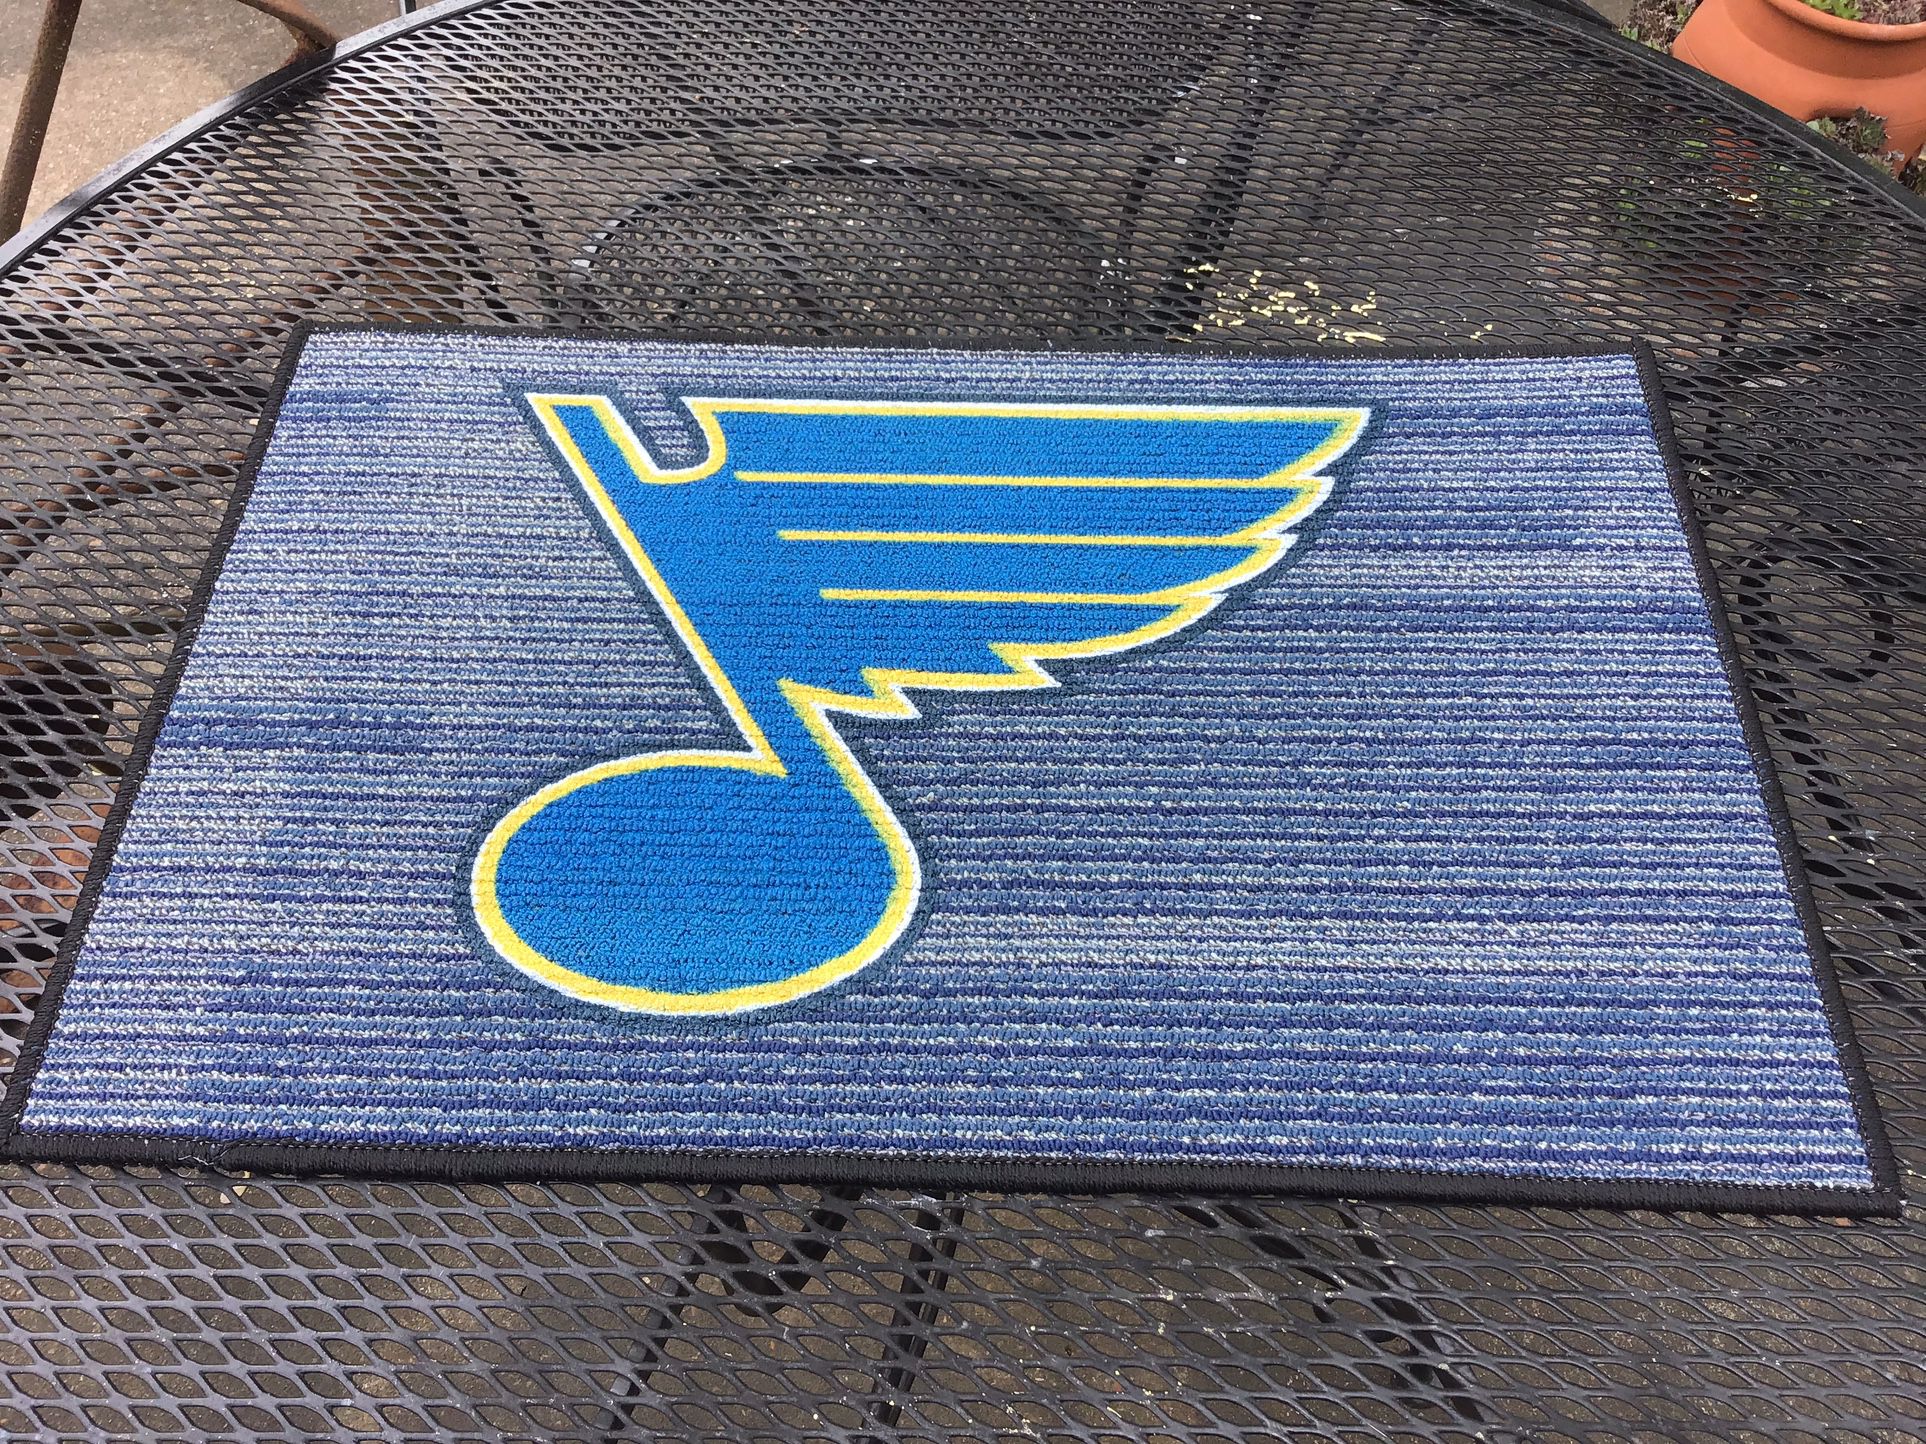 New Blues Doormat 27“ X 18“ Indoor Outdoor I have Cardinals mats also